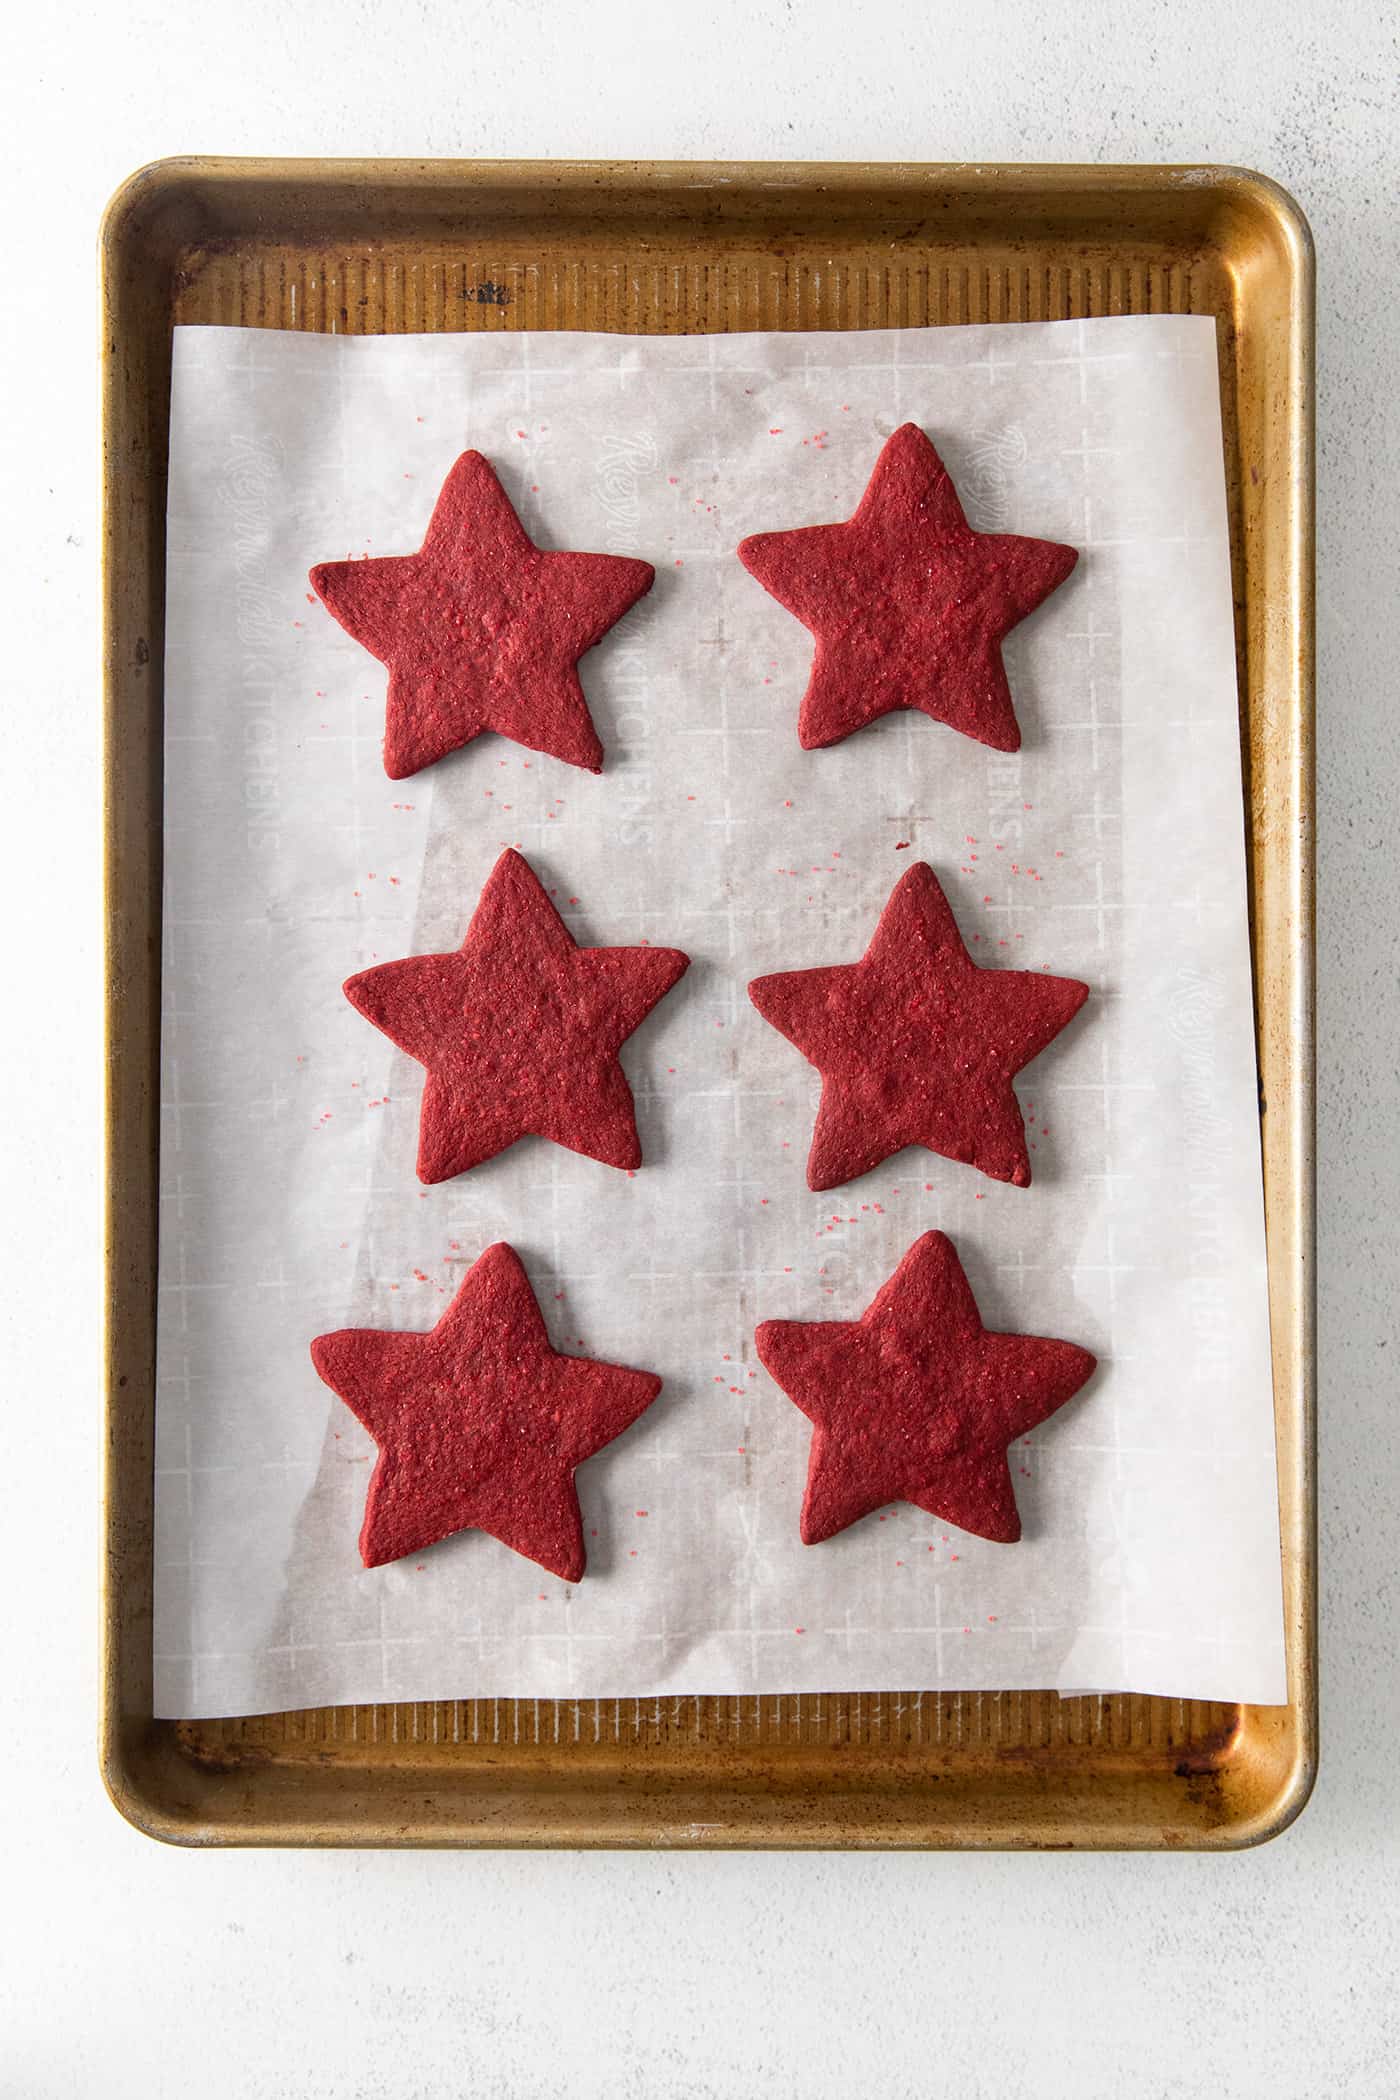 Star shaped red velvet cookies on a baking sheet